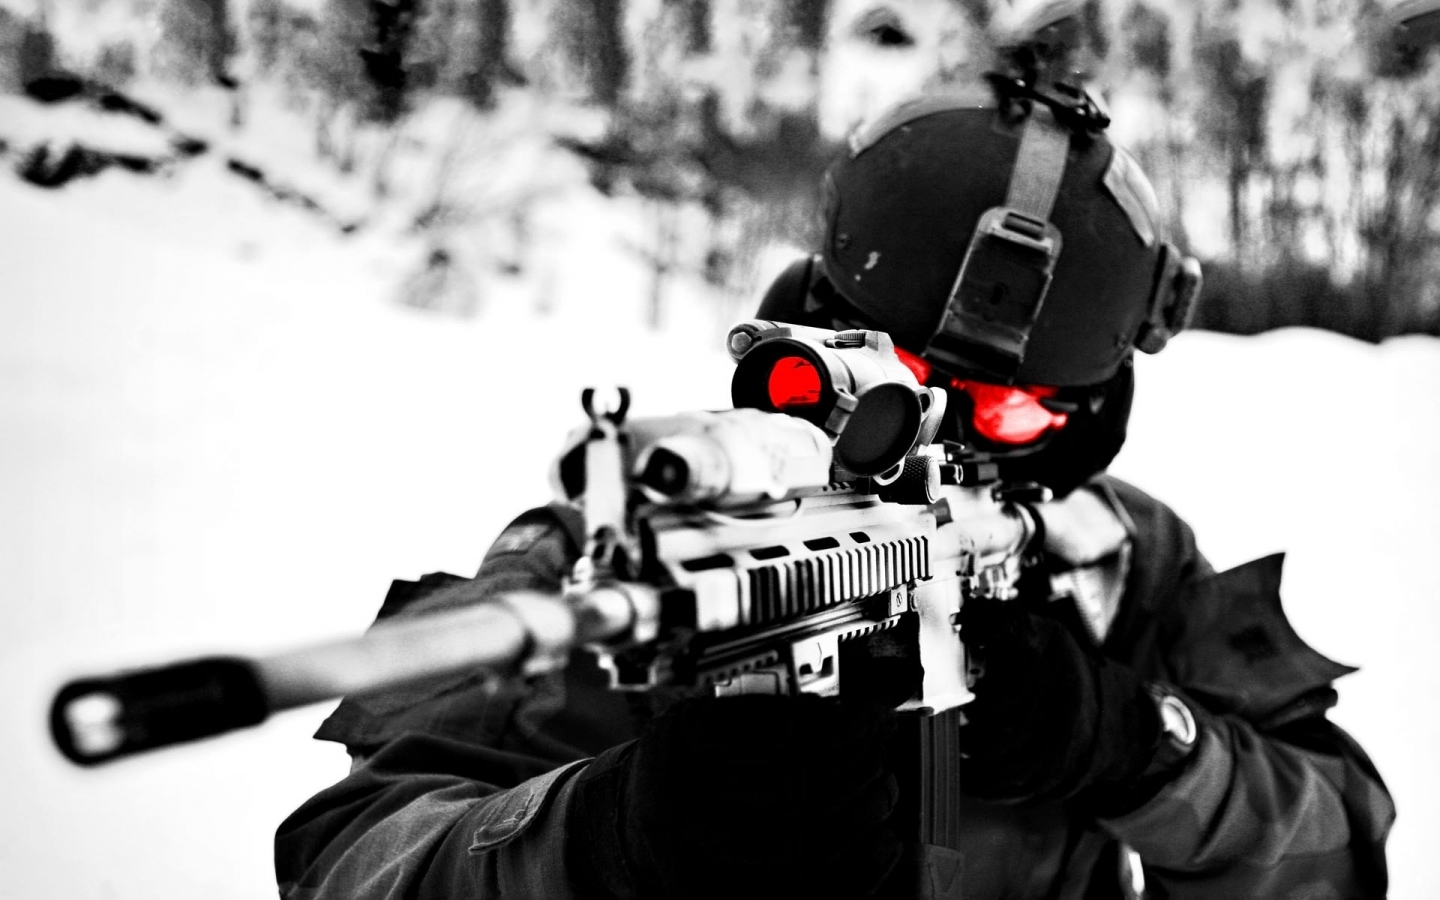 Winter Sniper for 1440 x 900 widescreen resolution